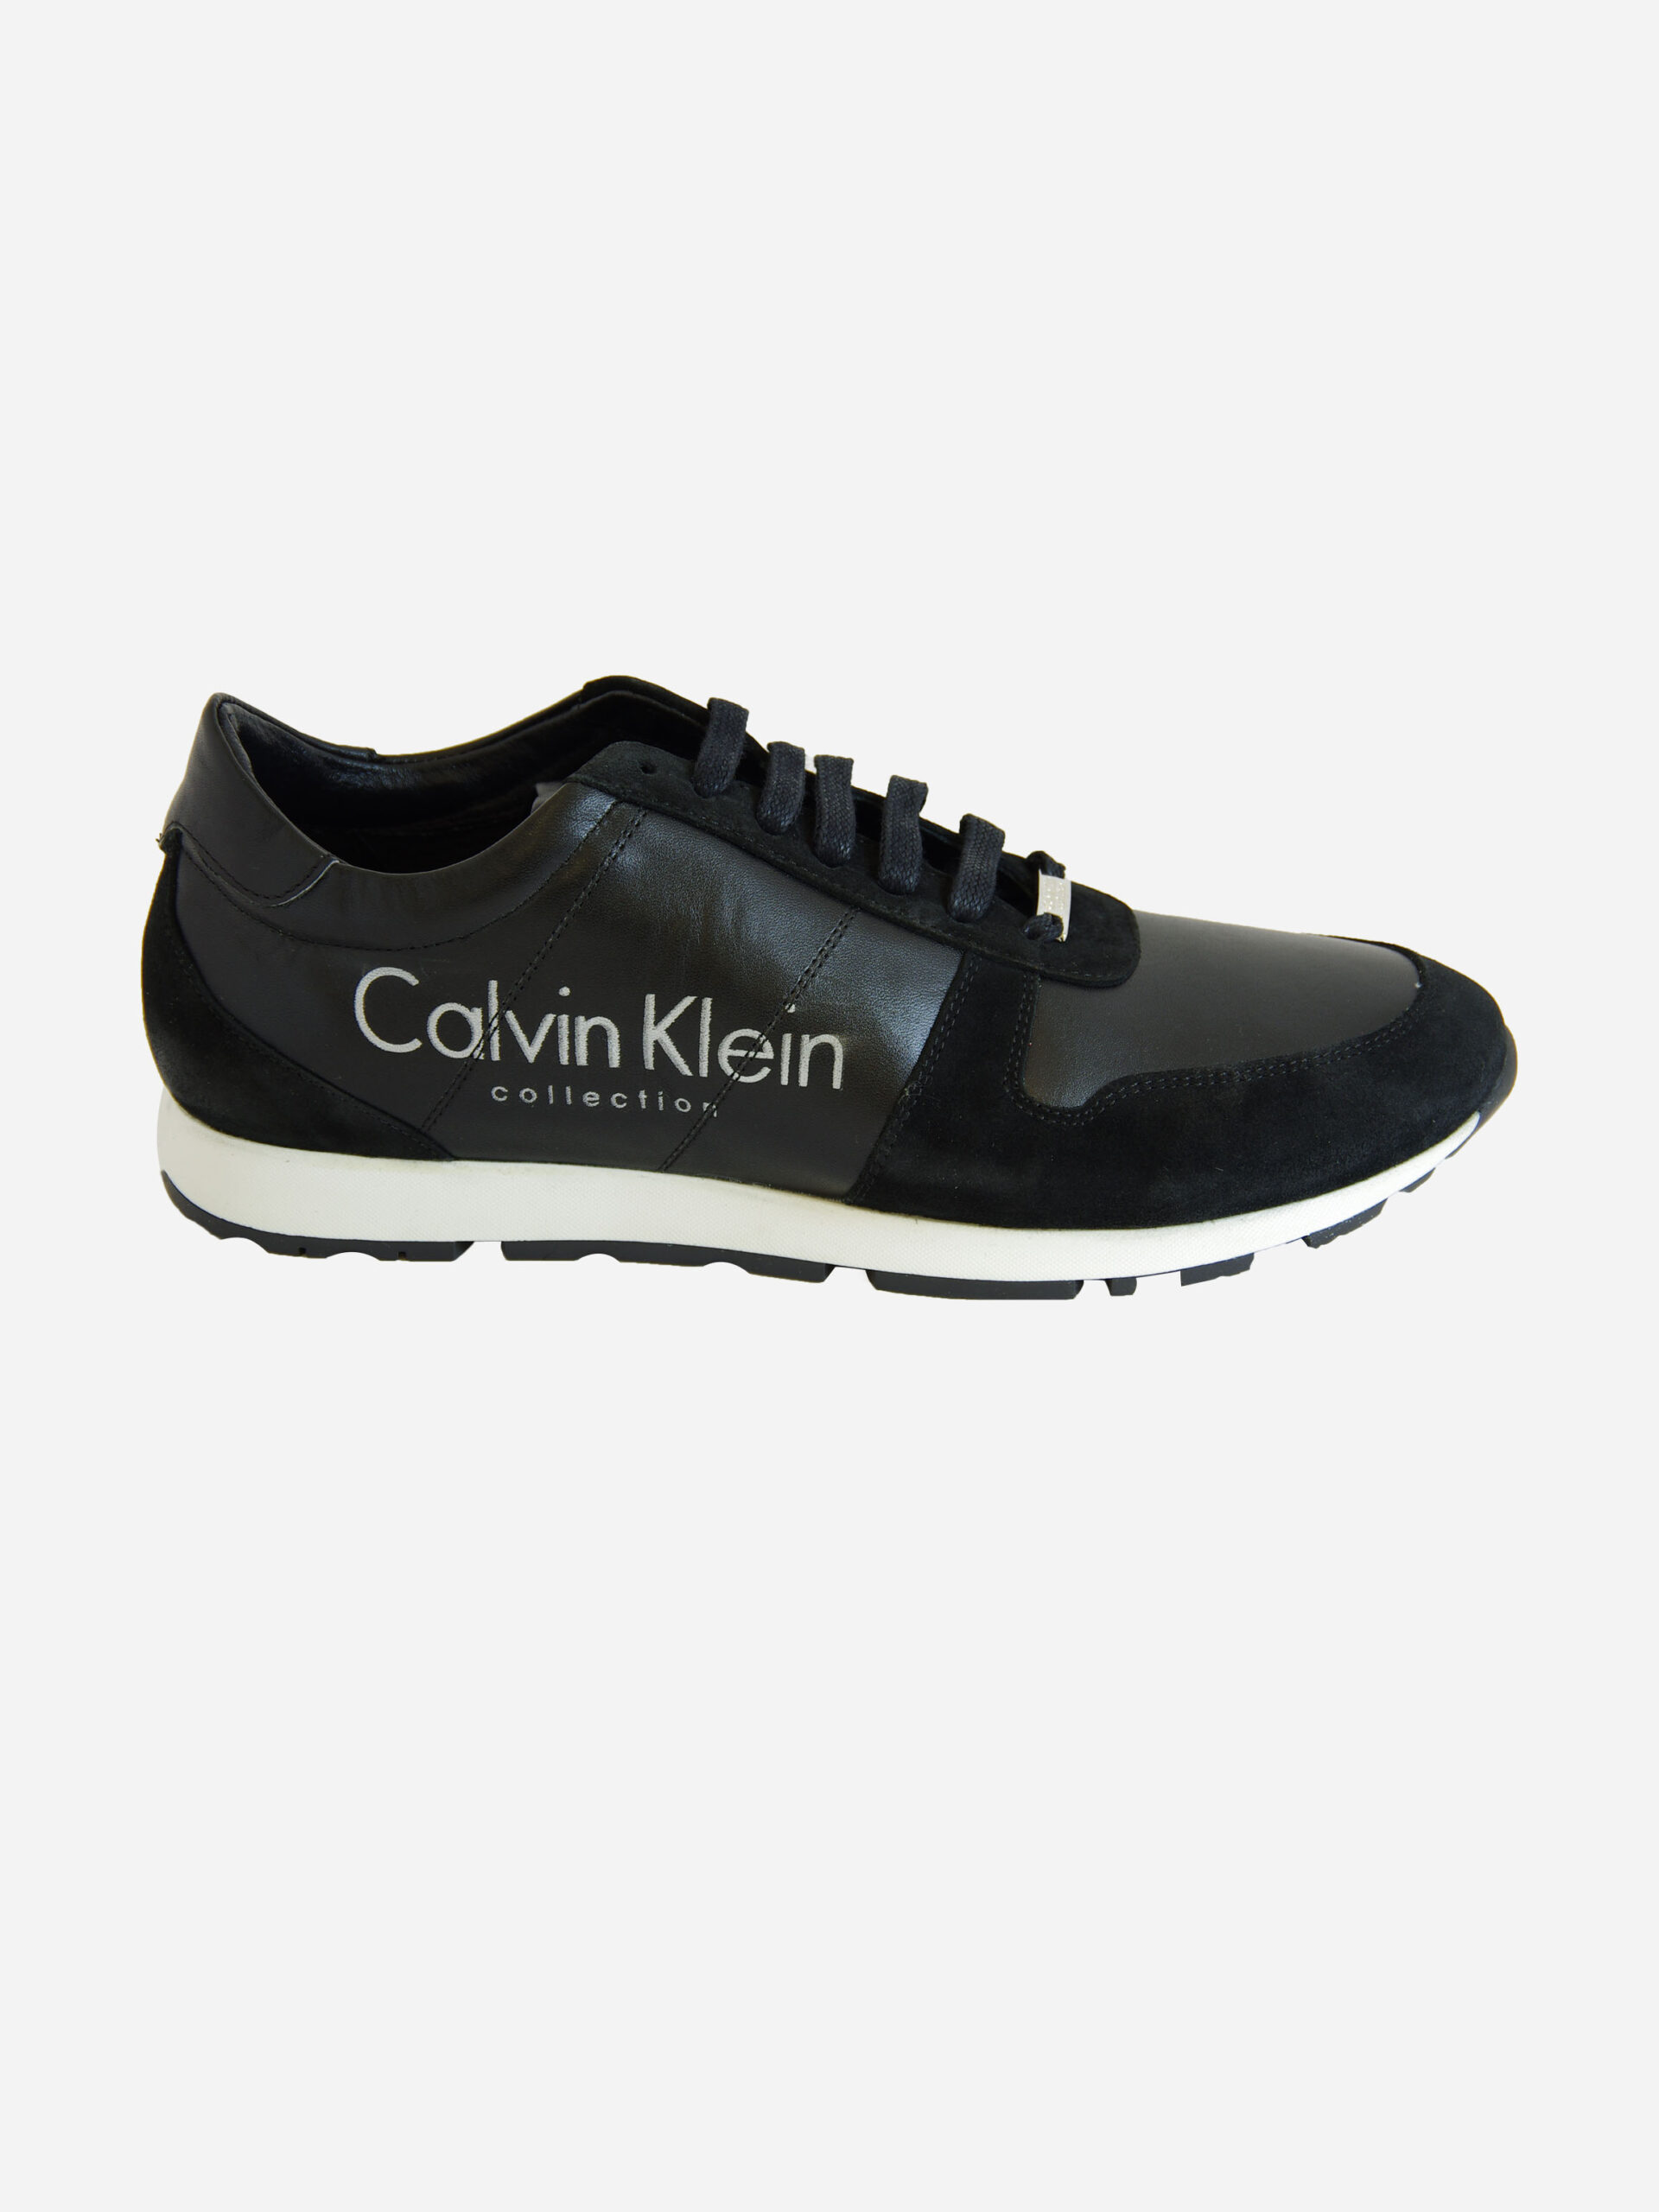 Calvin Klein Sneaker 4593 nera variante C fondo bianco